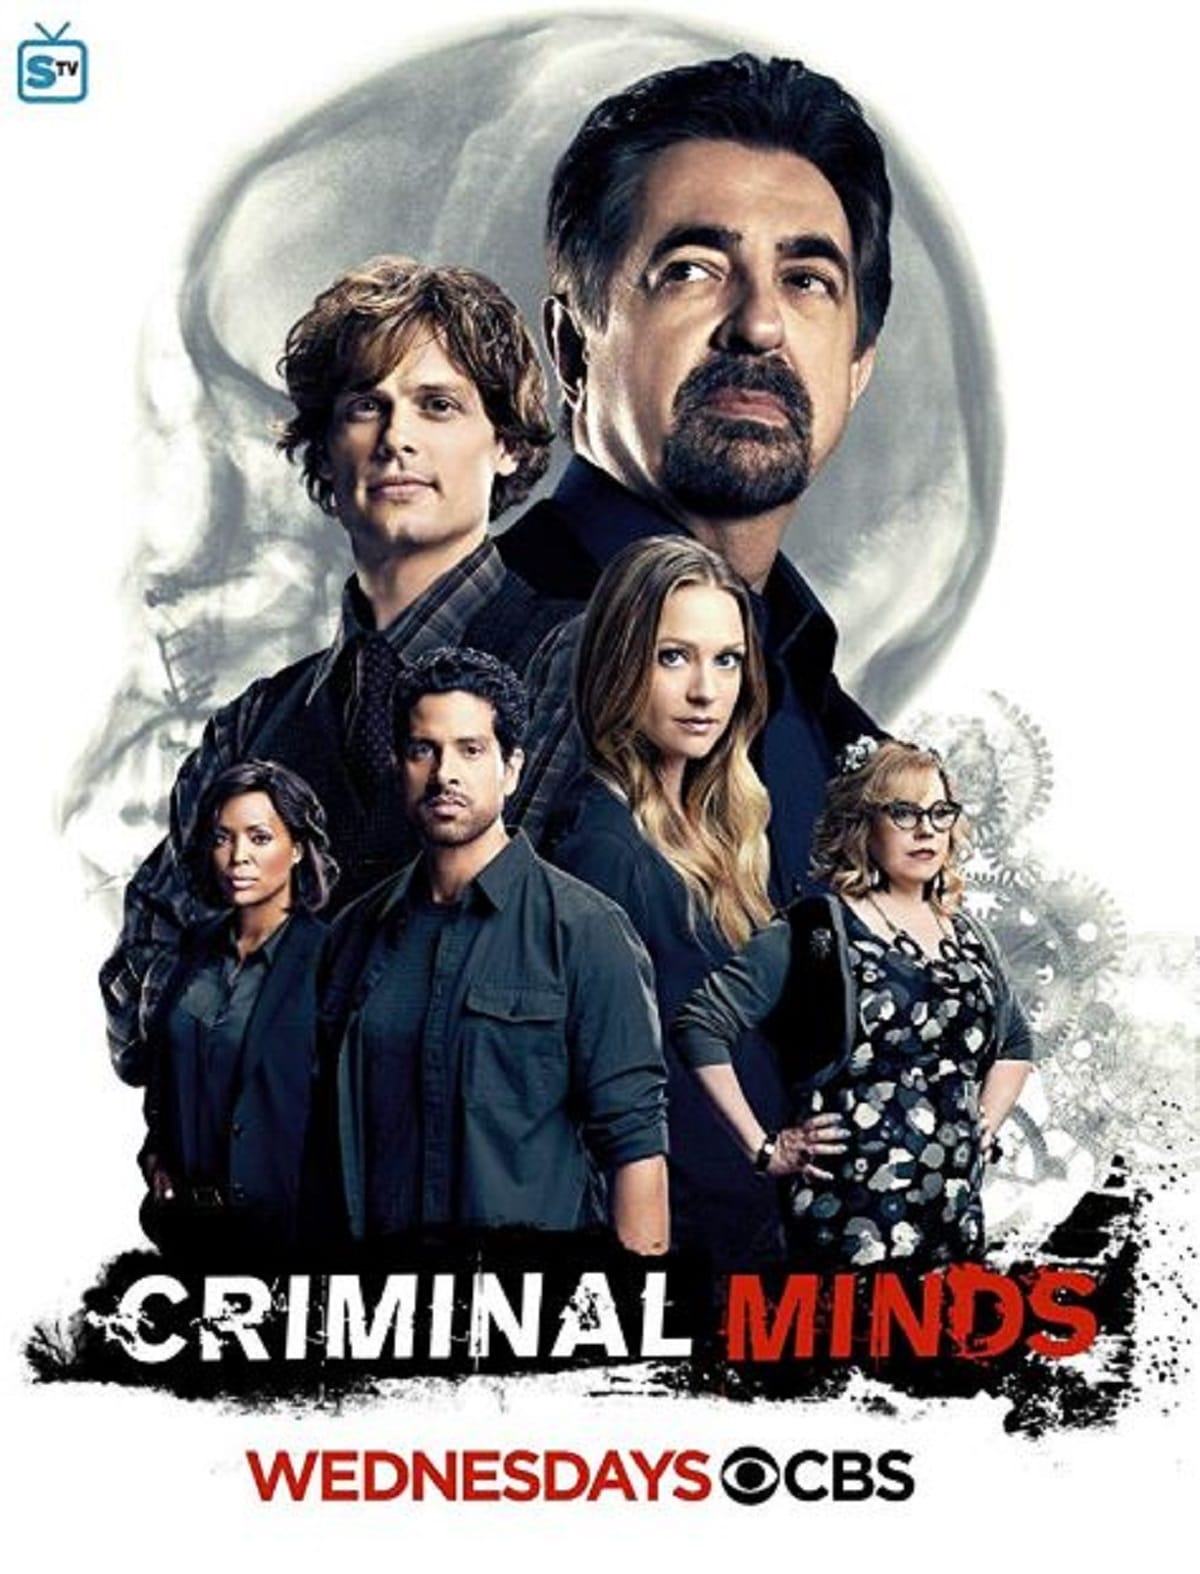 Criminal Minds Season 15 release date, trailers, cast, plot, spoilers